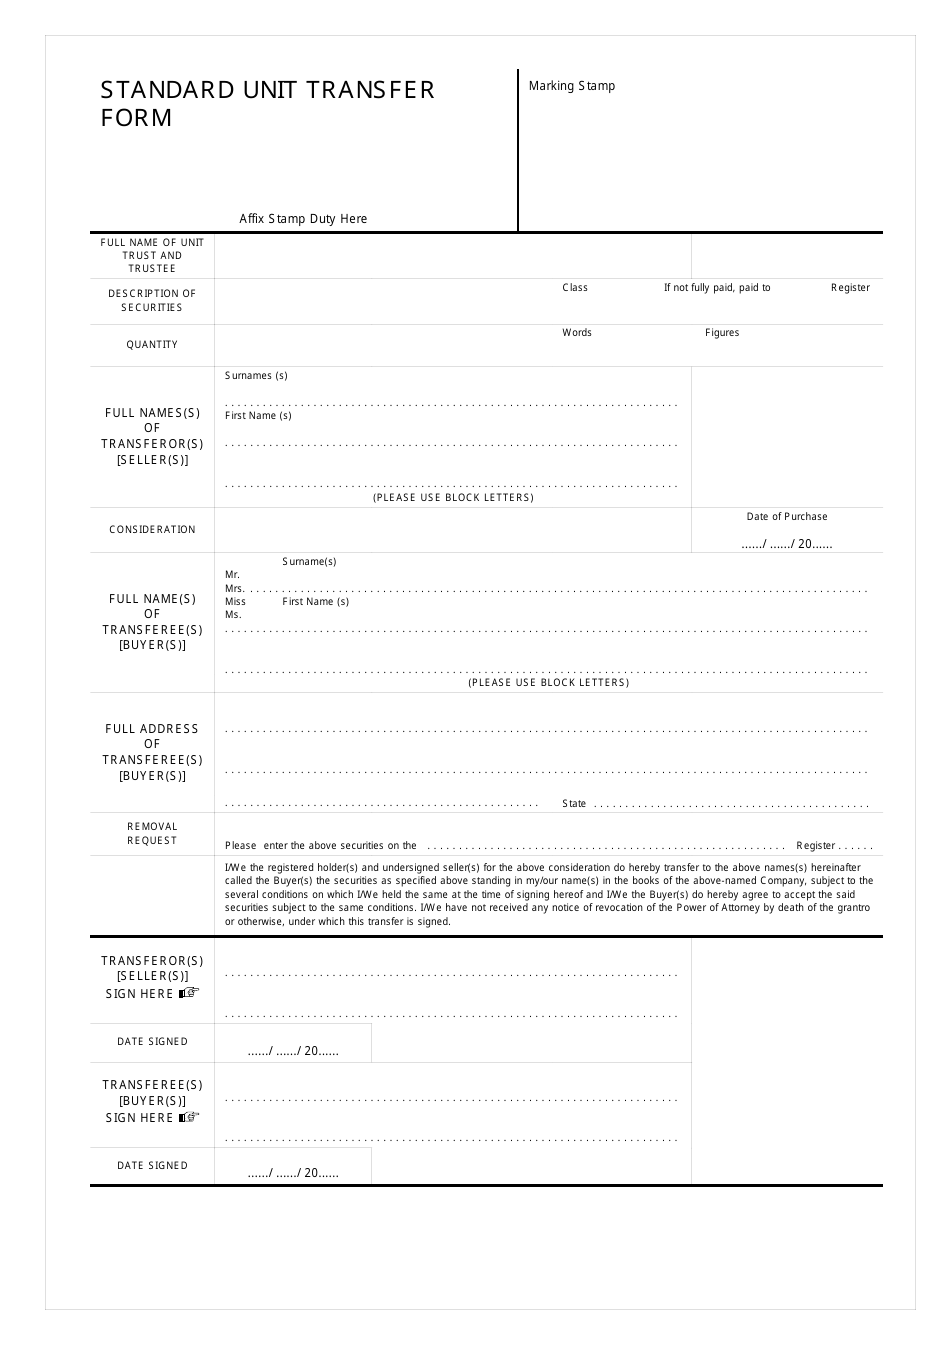 Standard Unit Transfer Form, Page 1